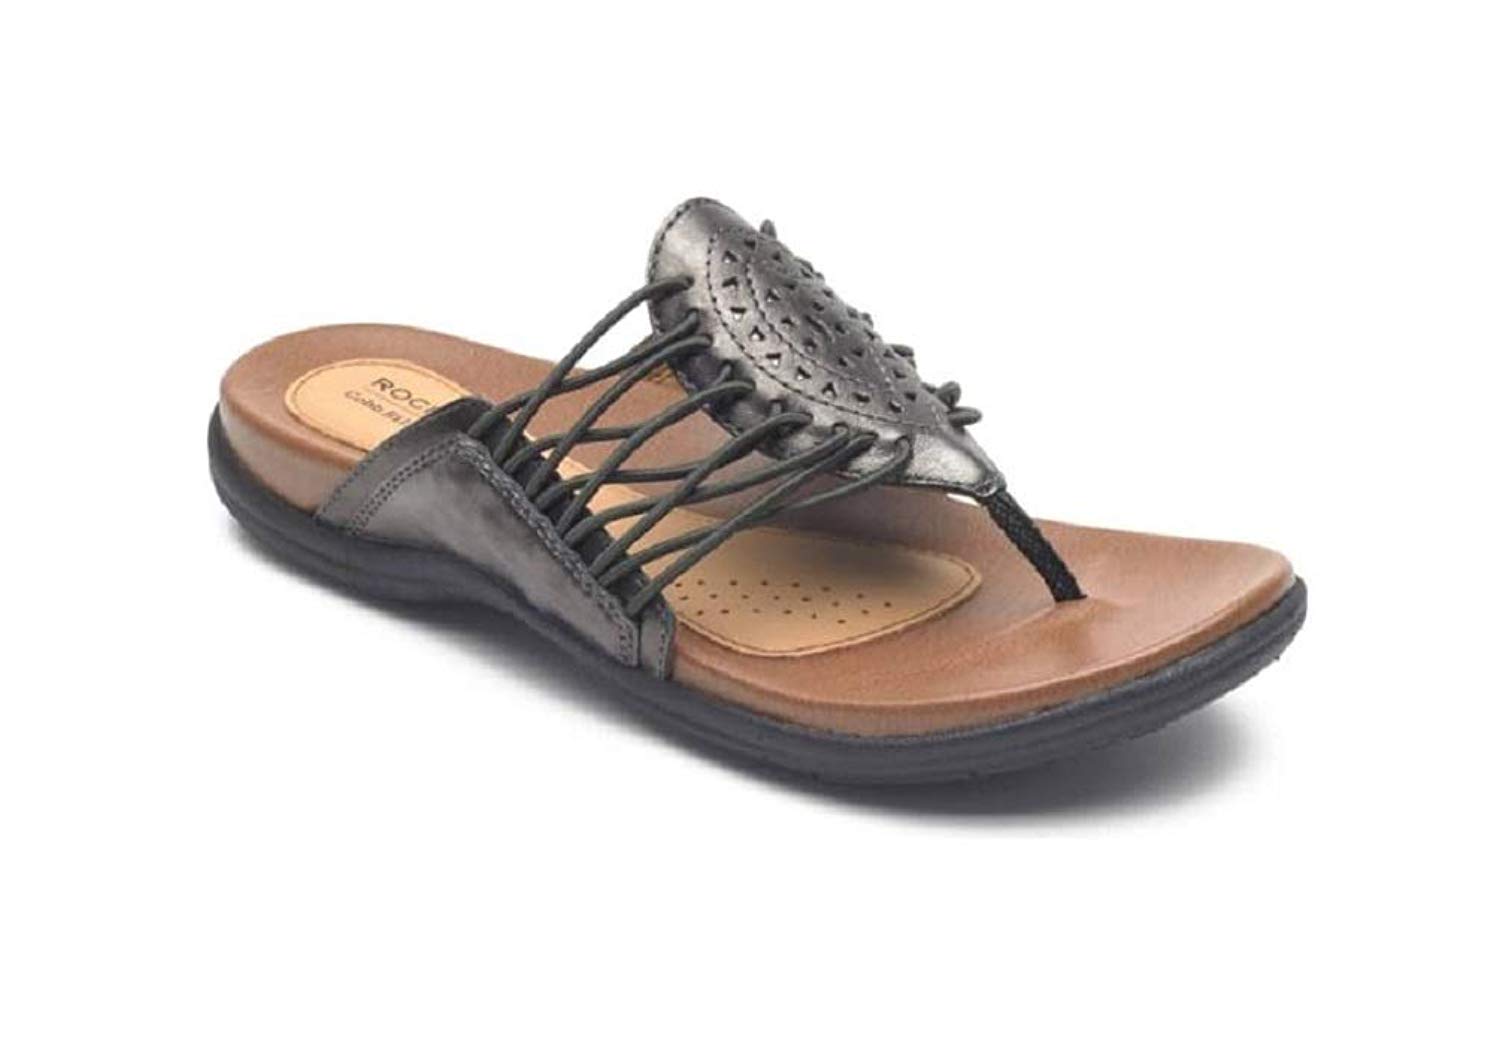 rockport thong sandals womens